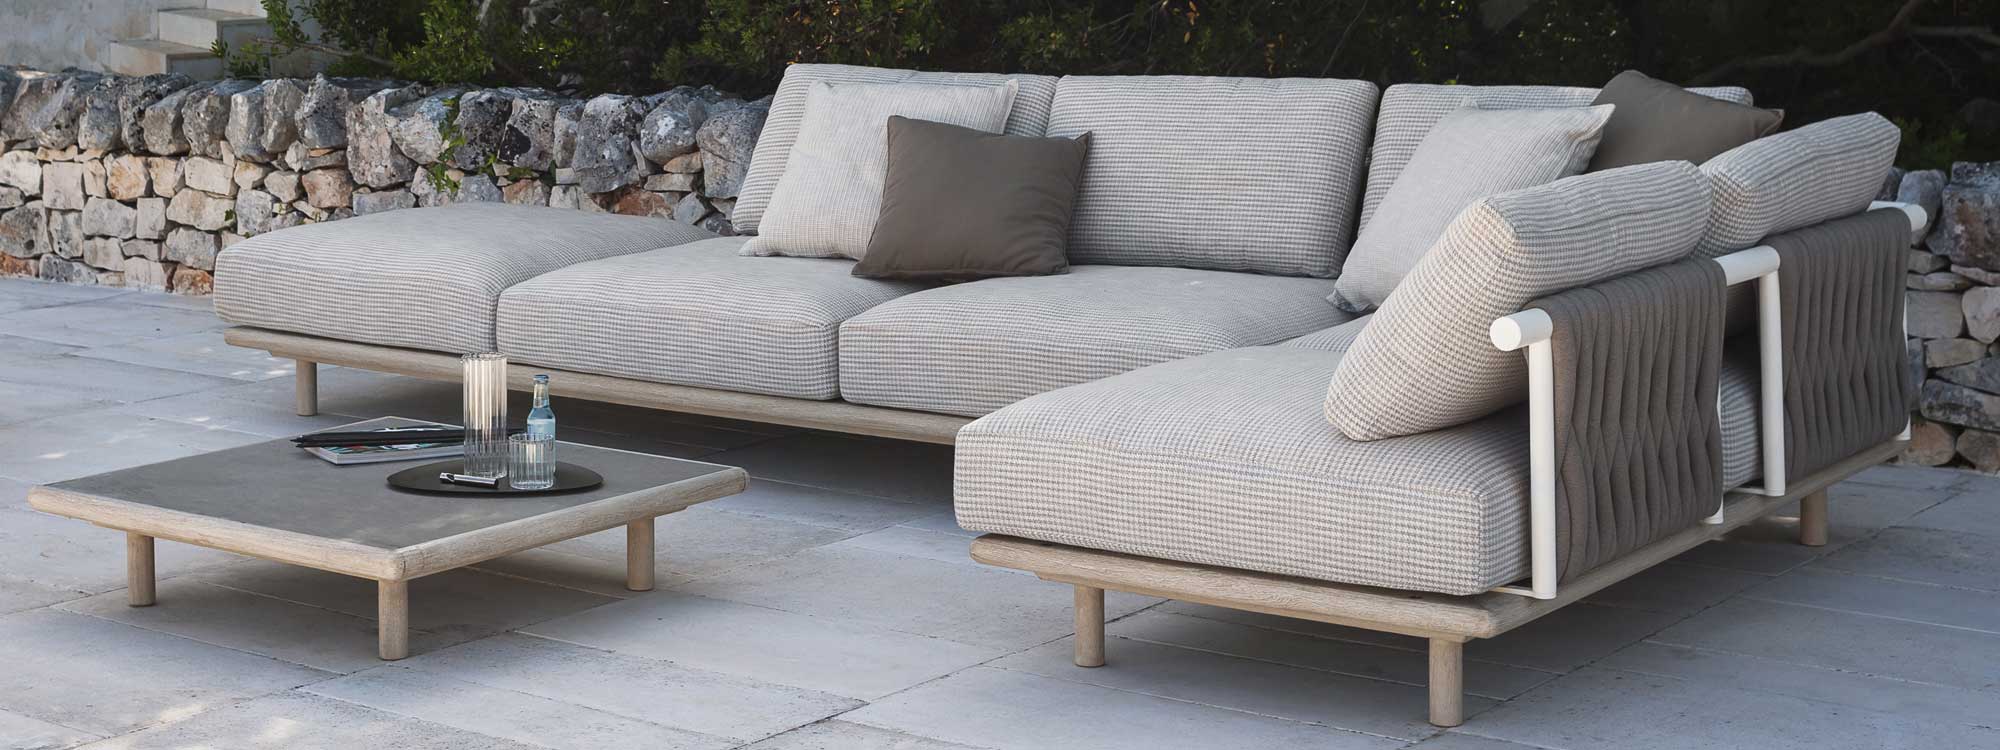 Eden luxury outdoor sofa is a modern garden sofa & modular exterior sofa in all-weather furniture materials by Roda Italian garden furniture